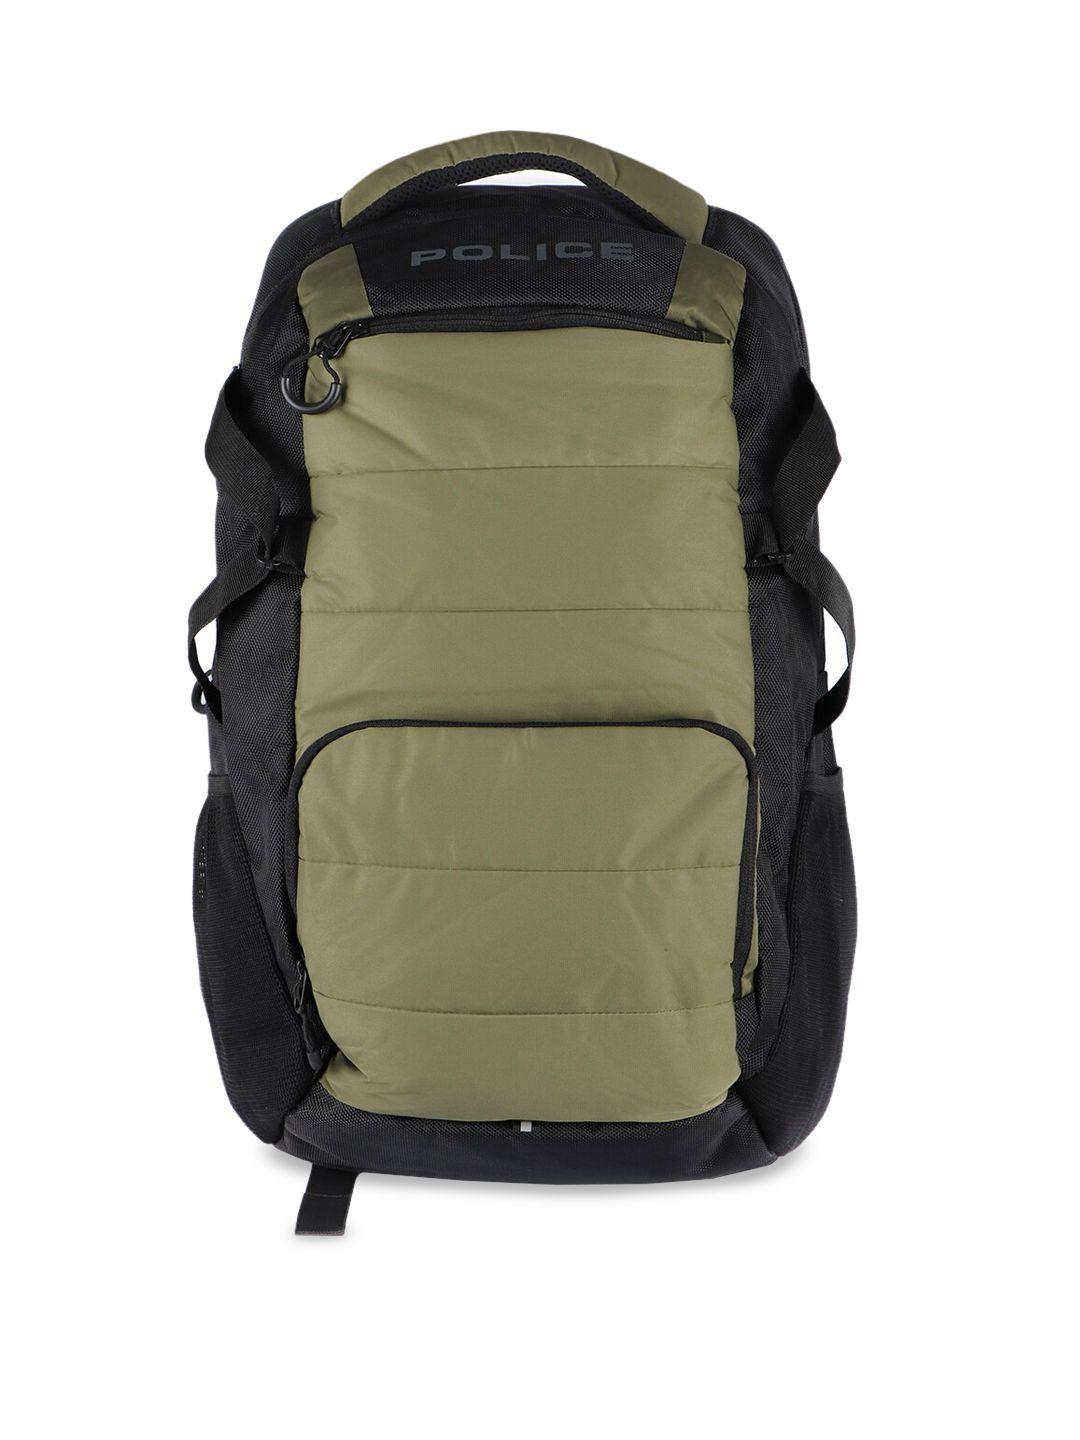 police unisex green & black solid laptop backpack